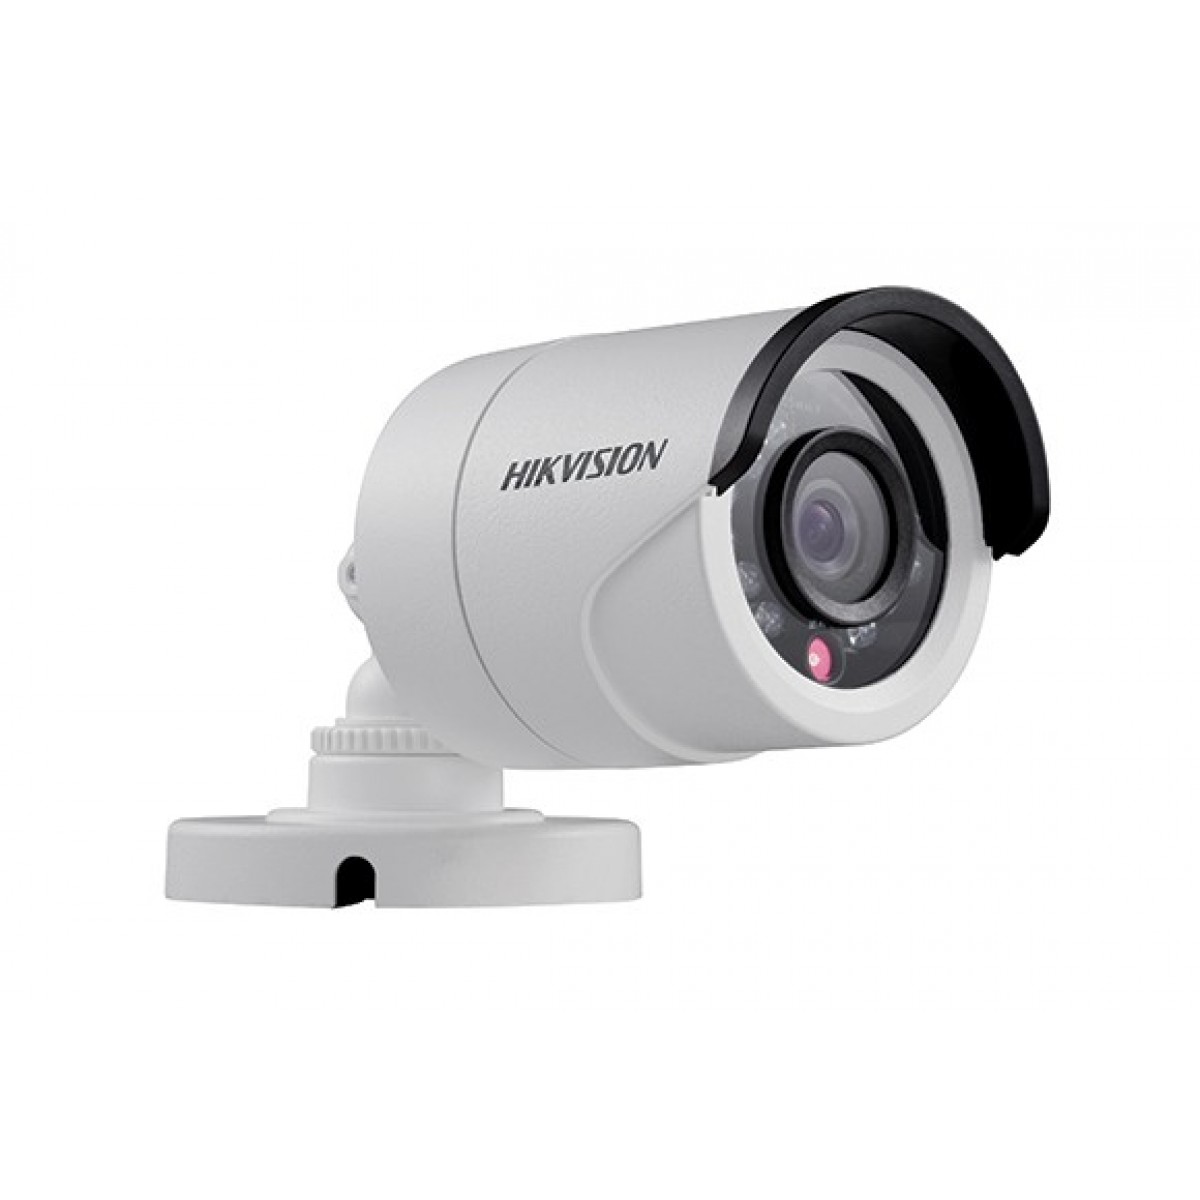 hikvision notify surveillance center